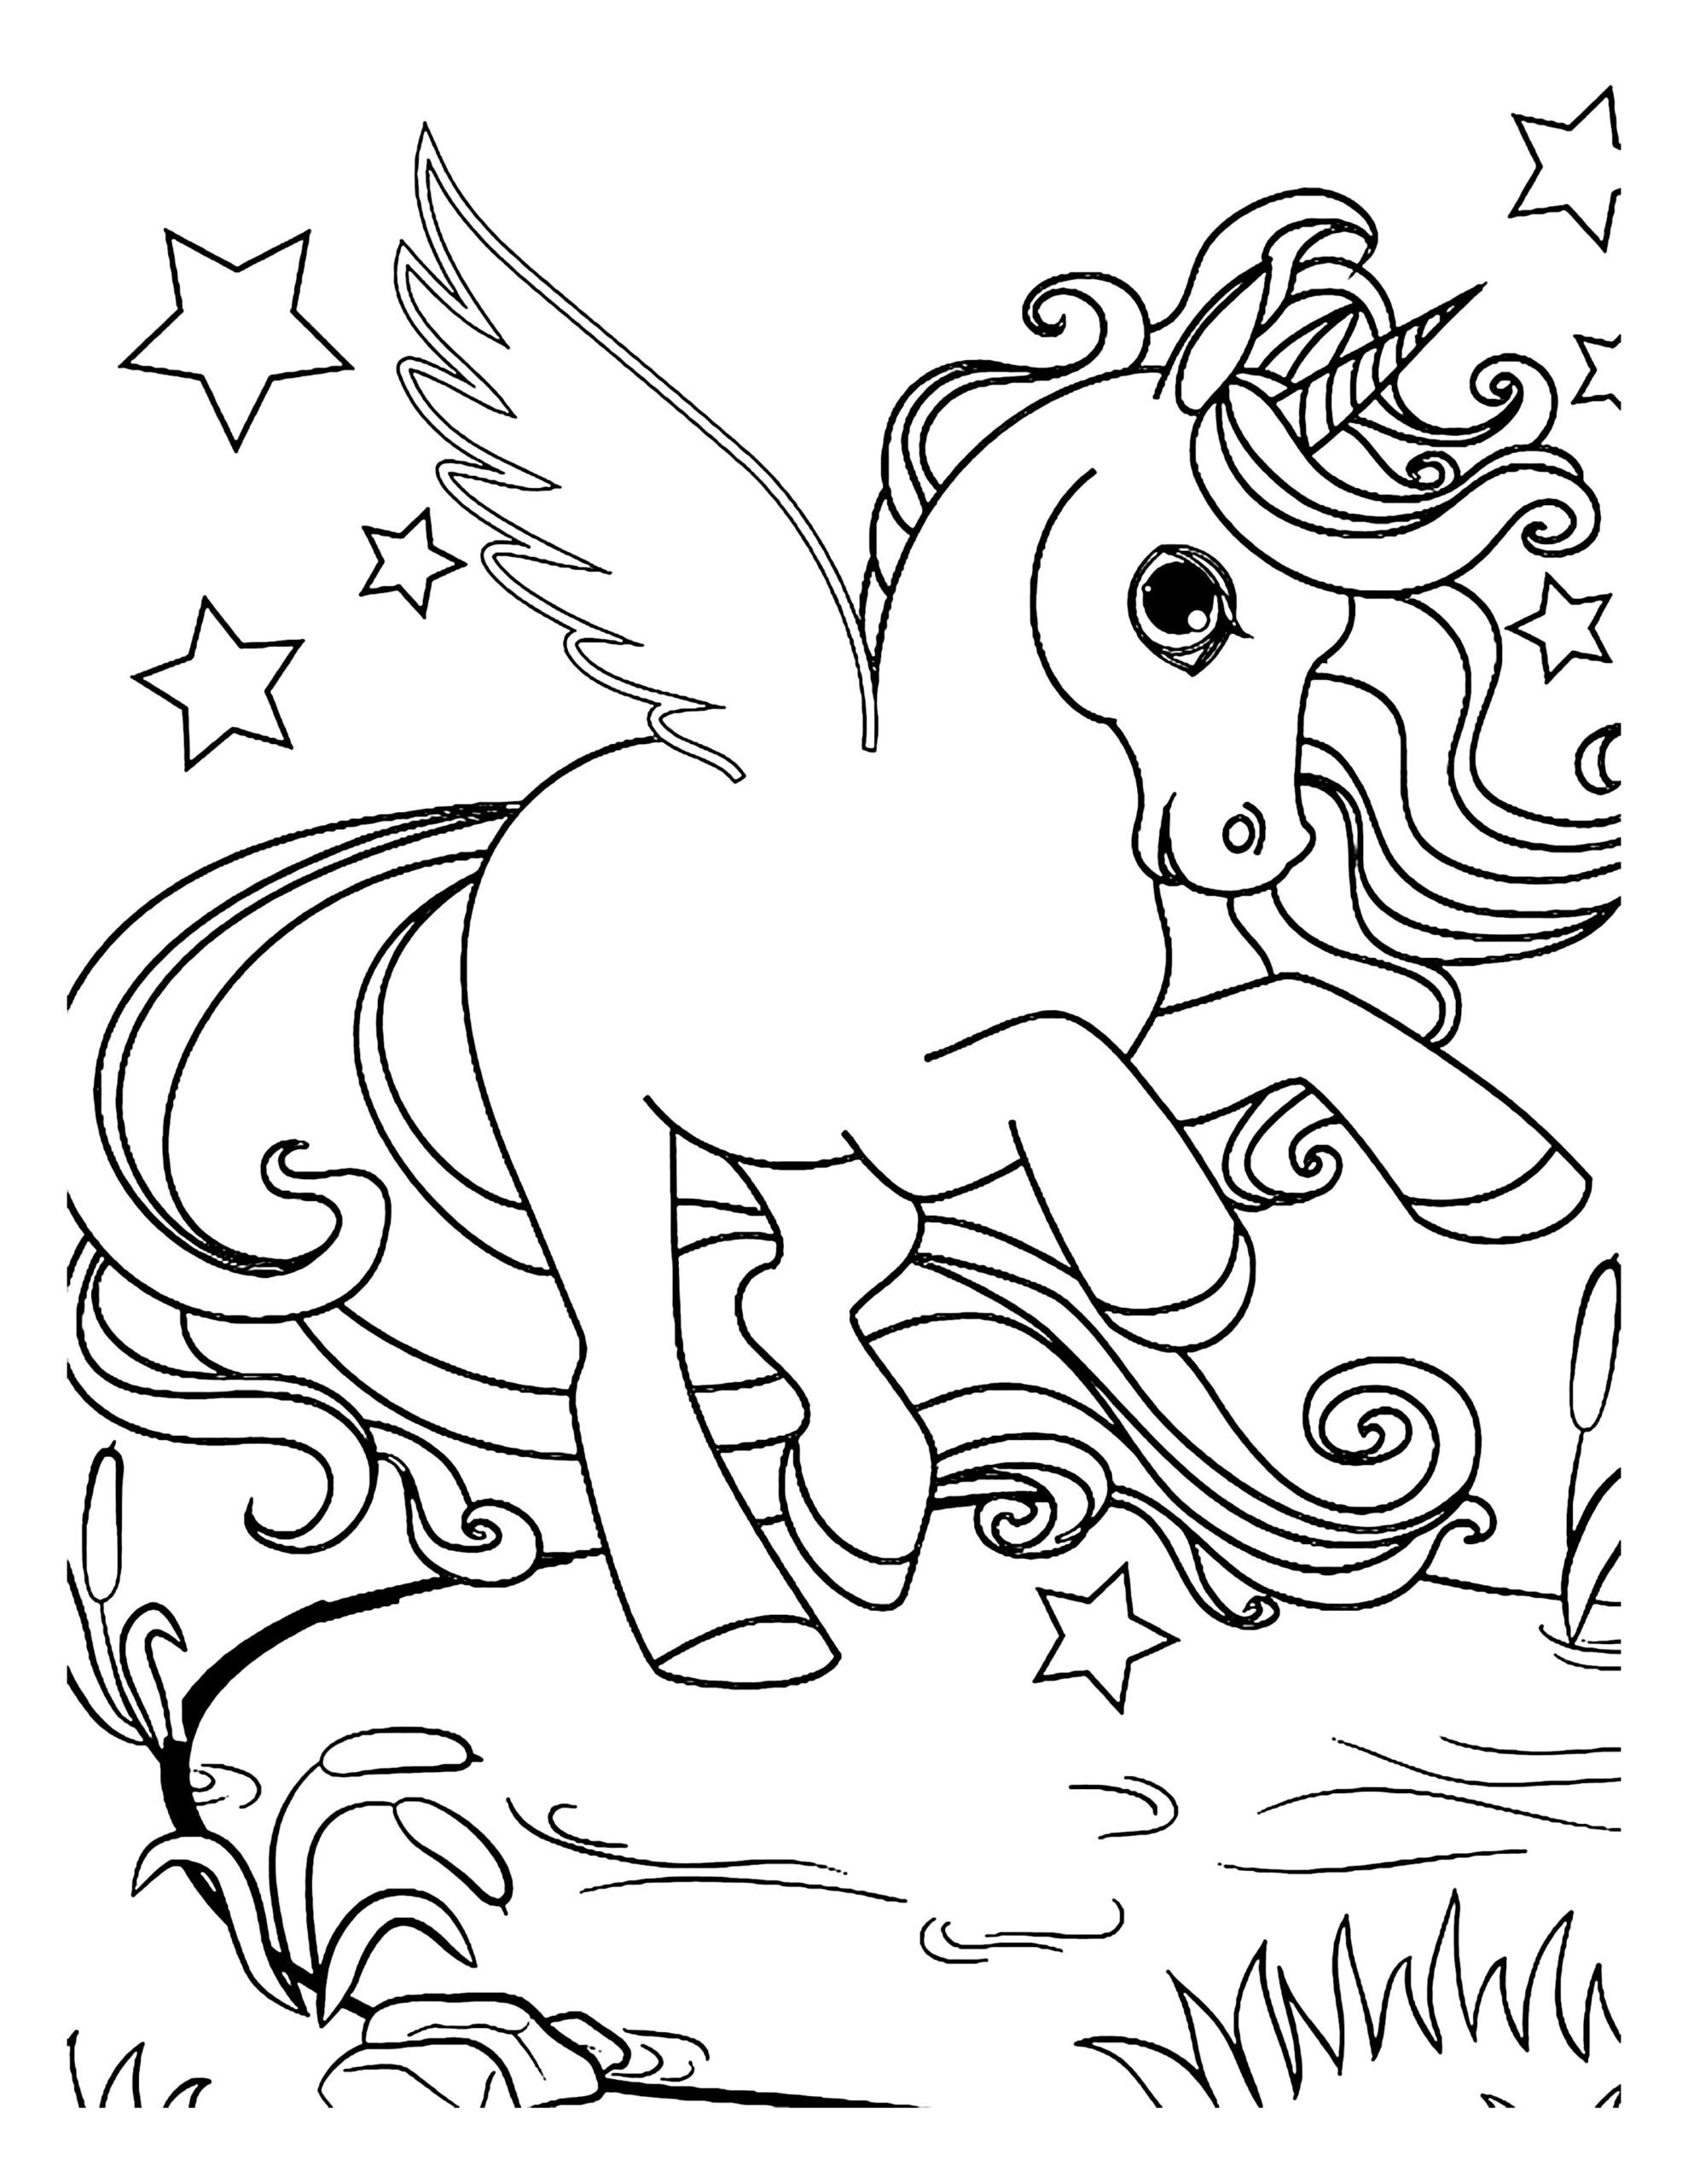 Unicorn with stars